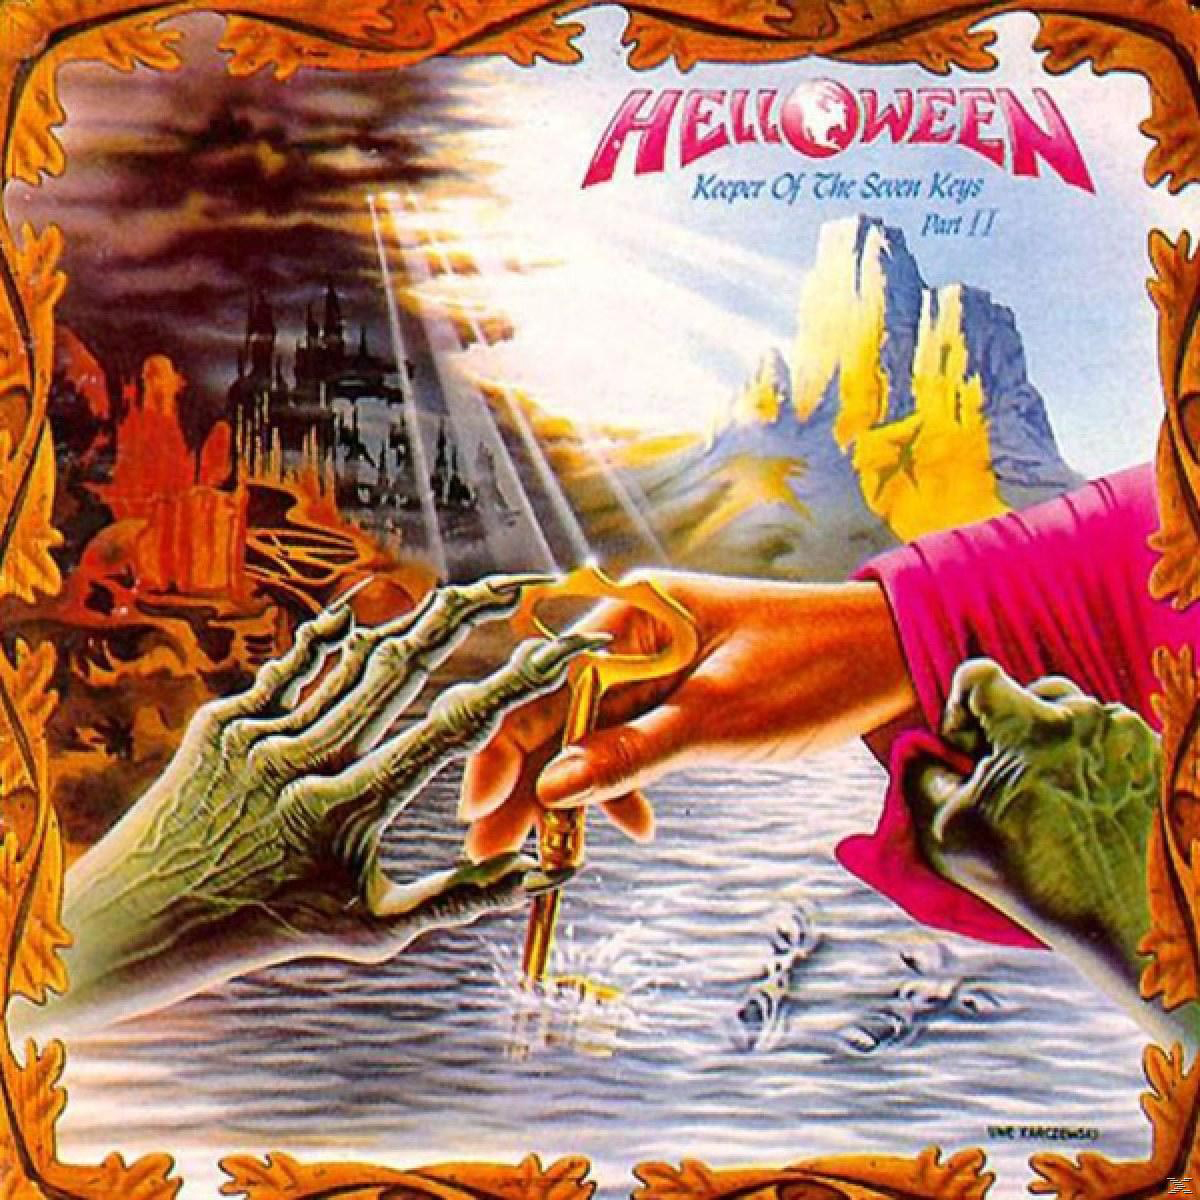 (Vinyl) Of (Part Ii) Helloween Seven Keeper - - Keys The